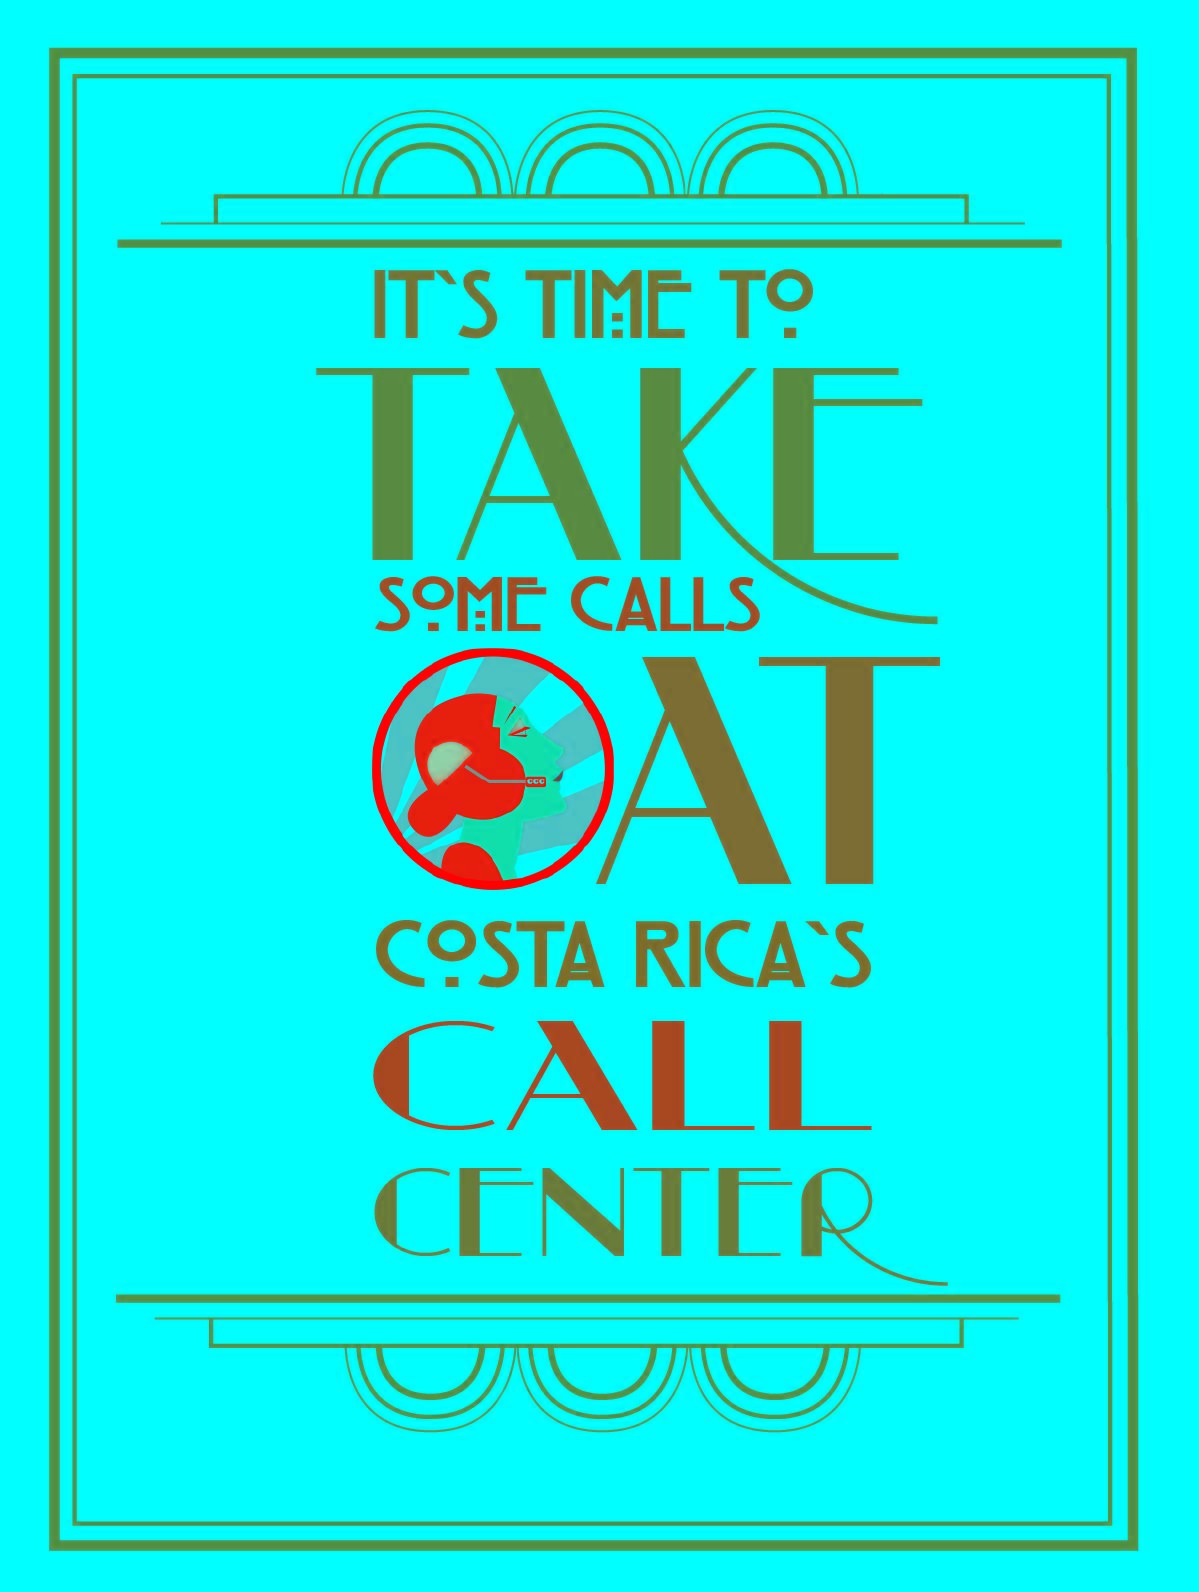 COLD CALL APPLY COSTA RICA.jpg  by richardblank